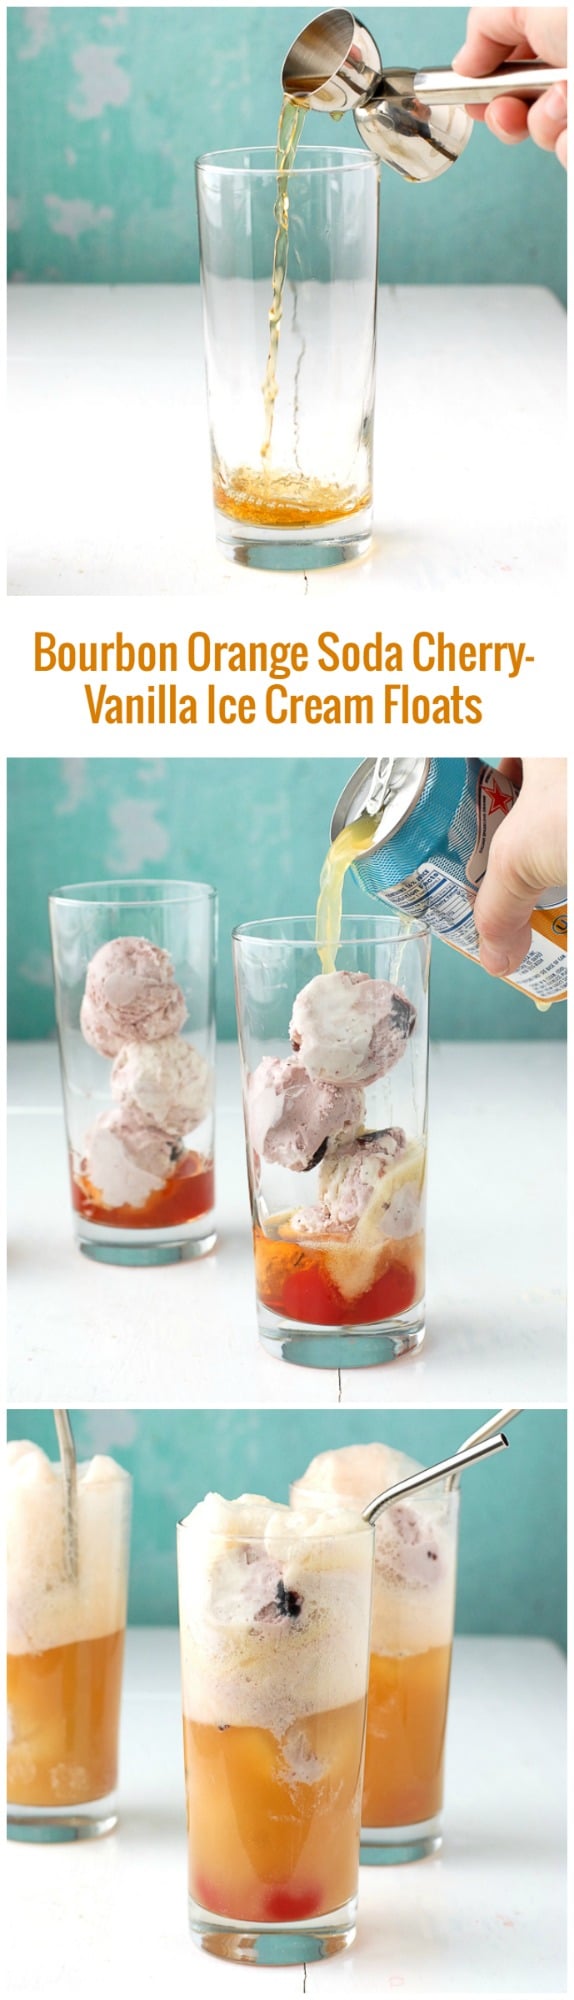 Boozy Orange Soda Bourbon Cherry-Vanilla Ice Cream Floats